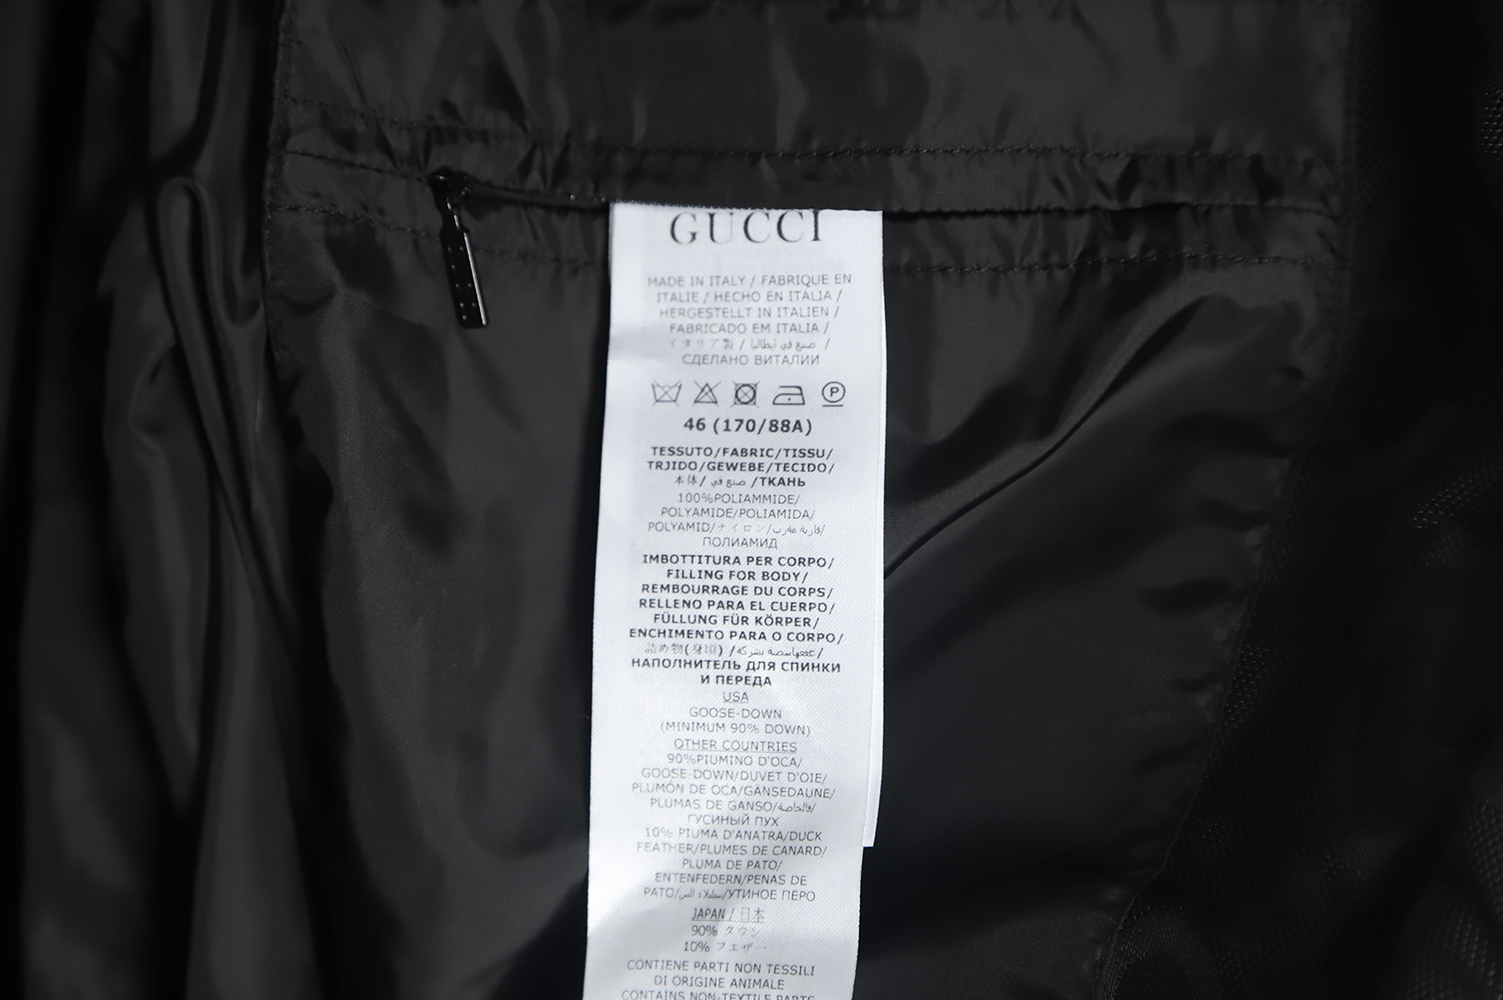 Gucci 22FW shadow jacquard down jacket TSK1